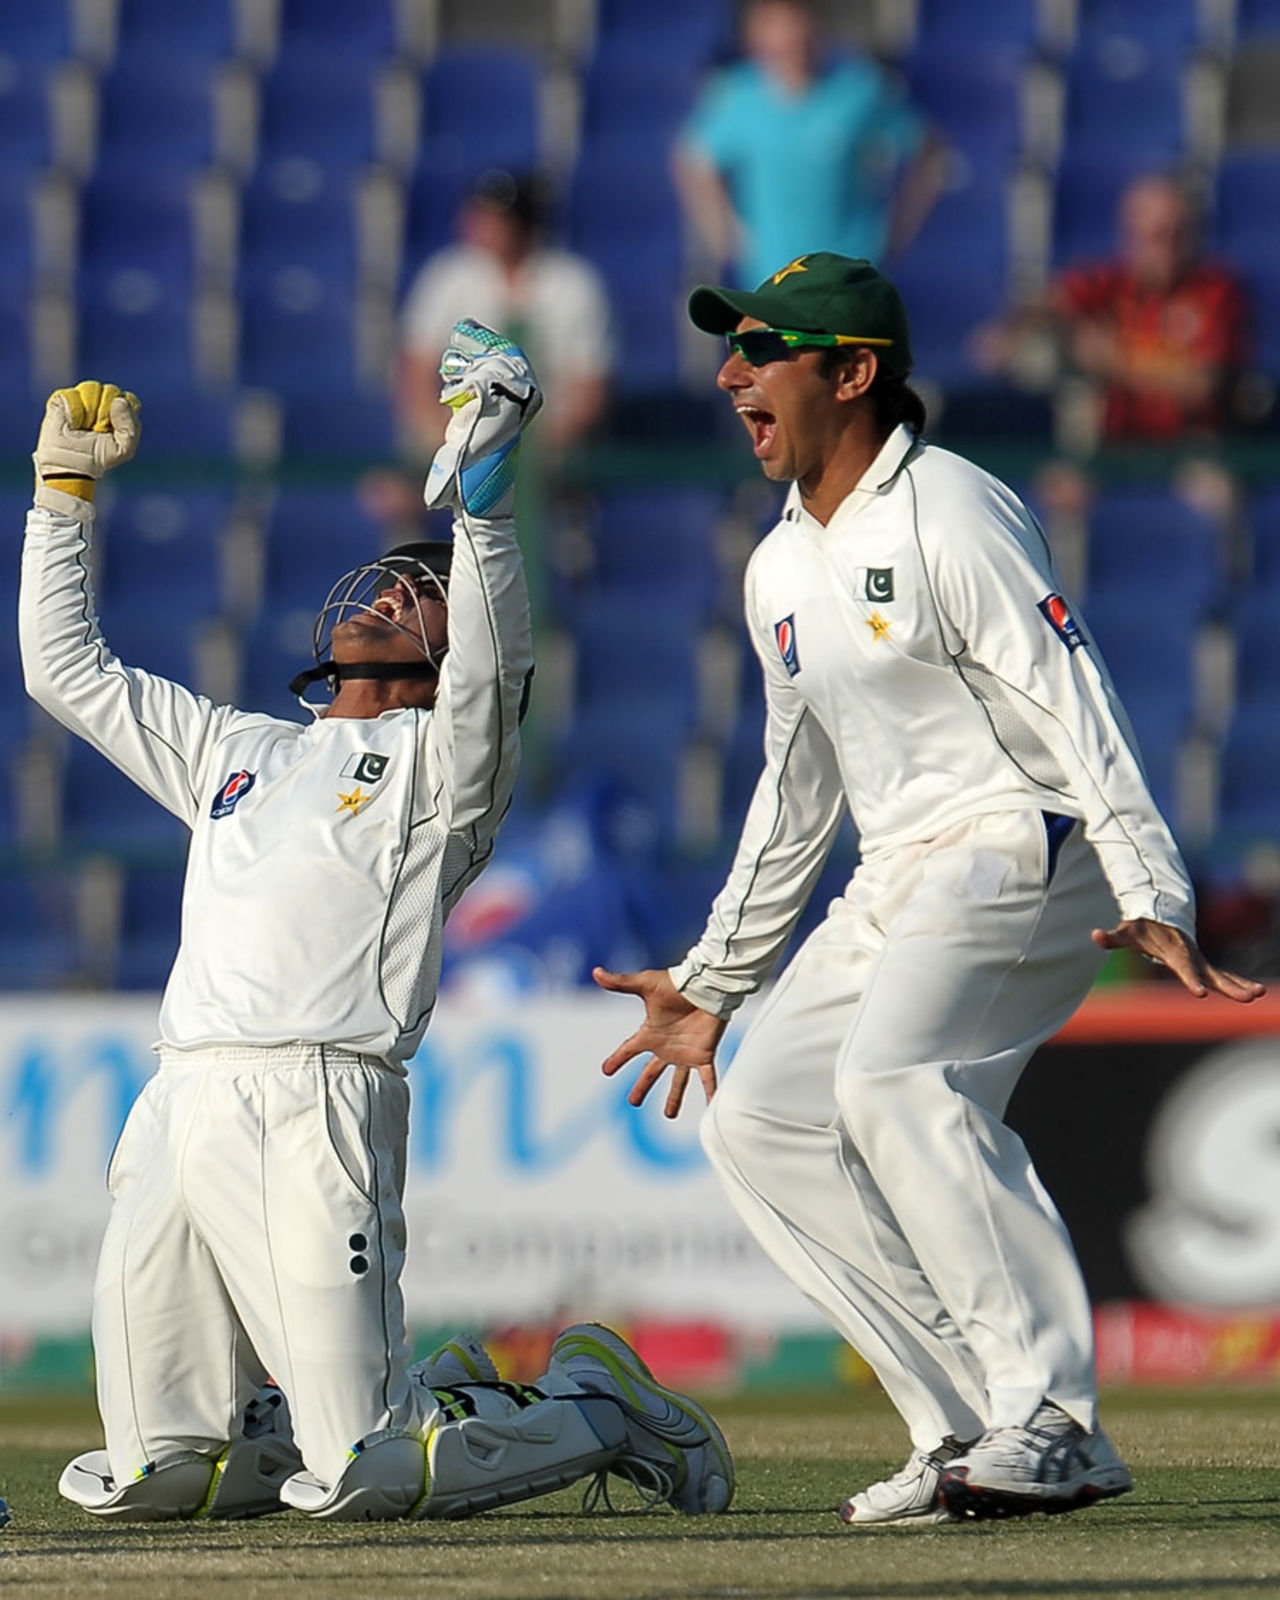 Adnan Akmal and Saeed Ajmal celebrate Pakistan's victory, Pakistan v England, 2nd Test, Abu Dhabi, 4th day, January 28, 2012